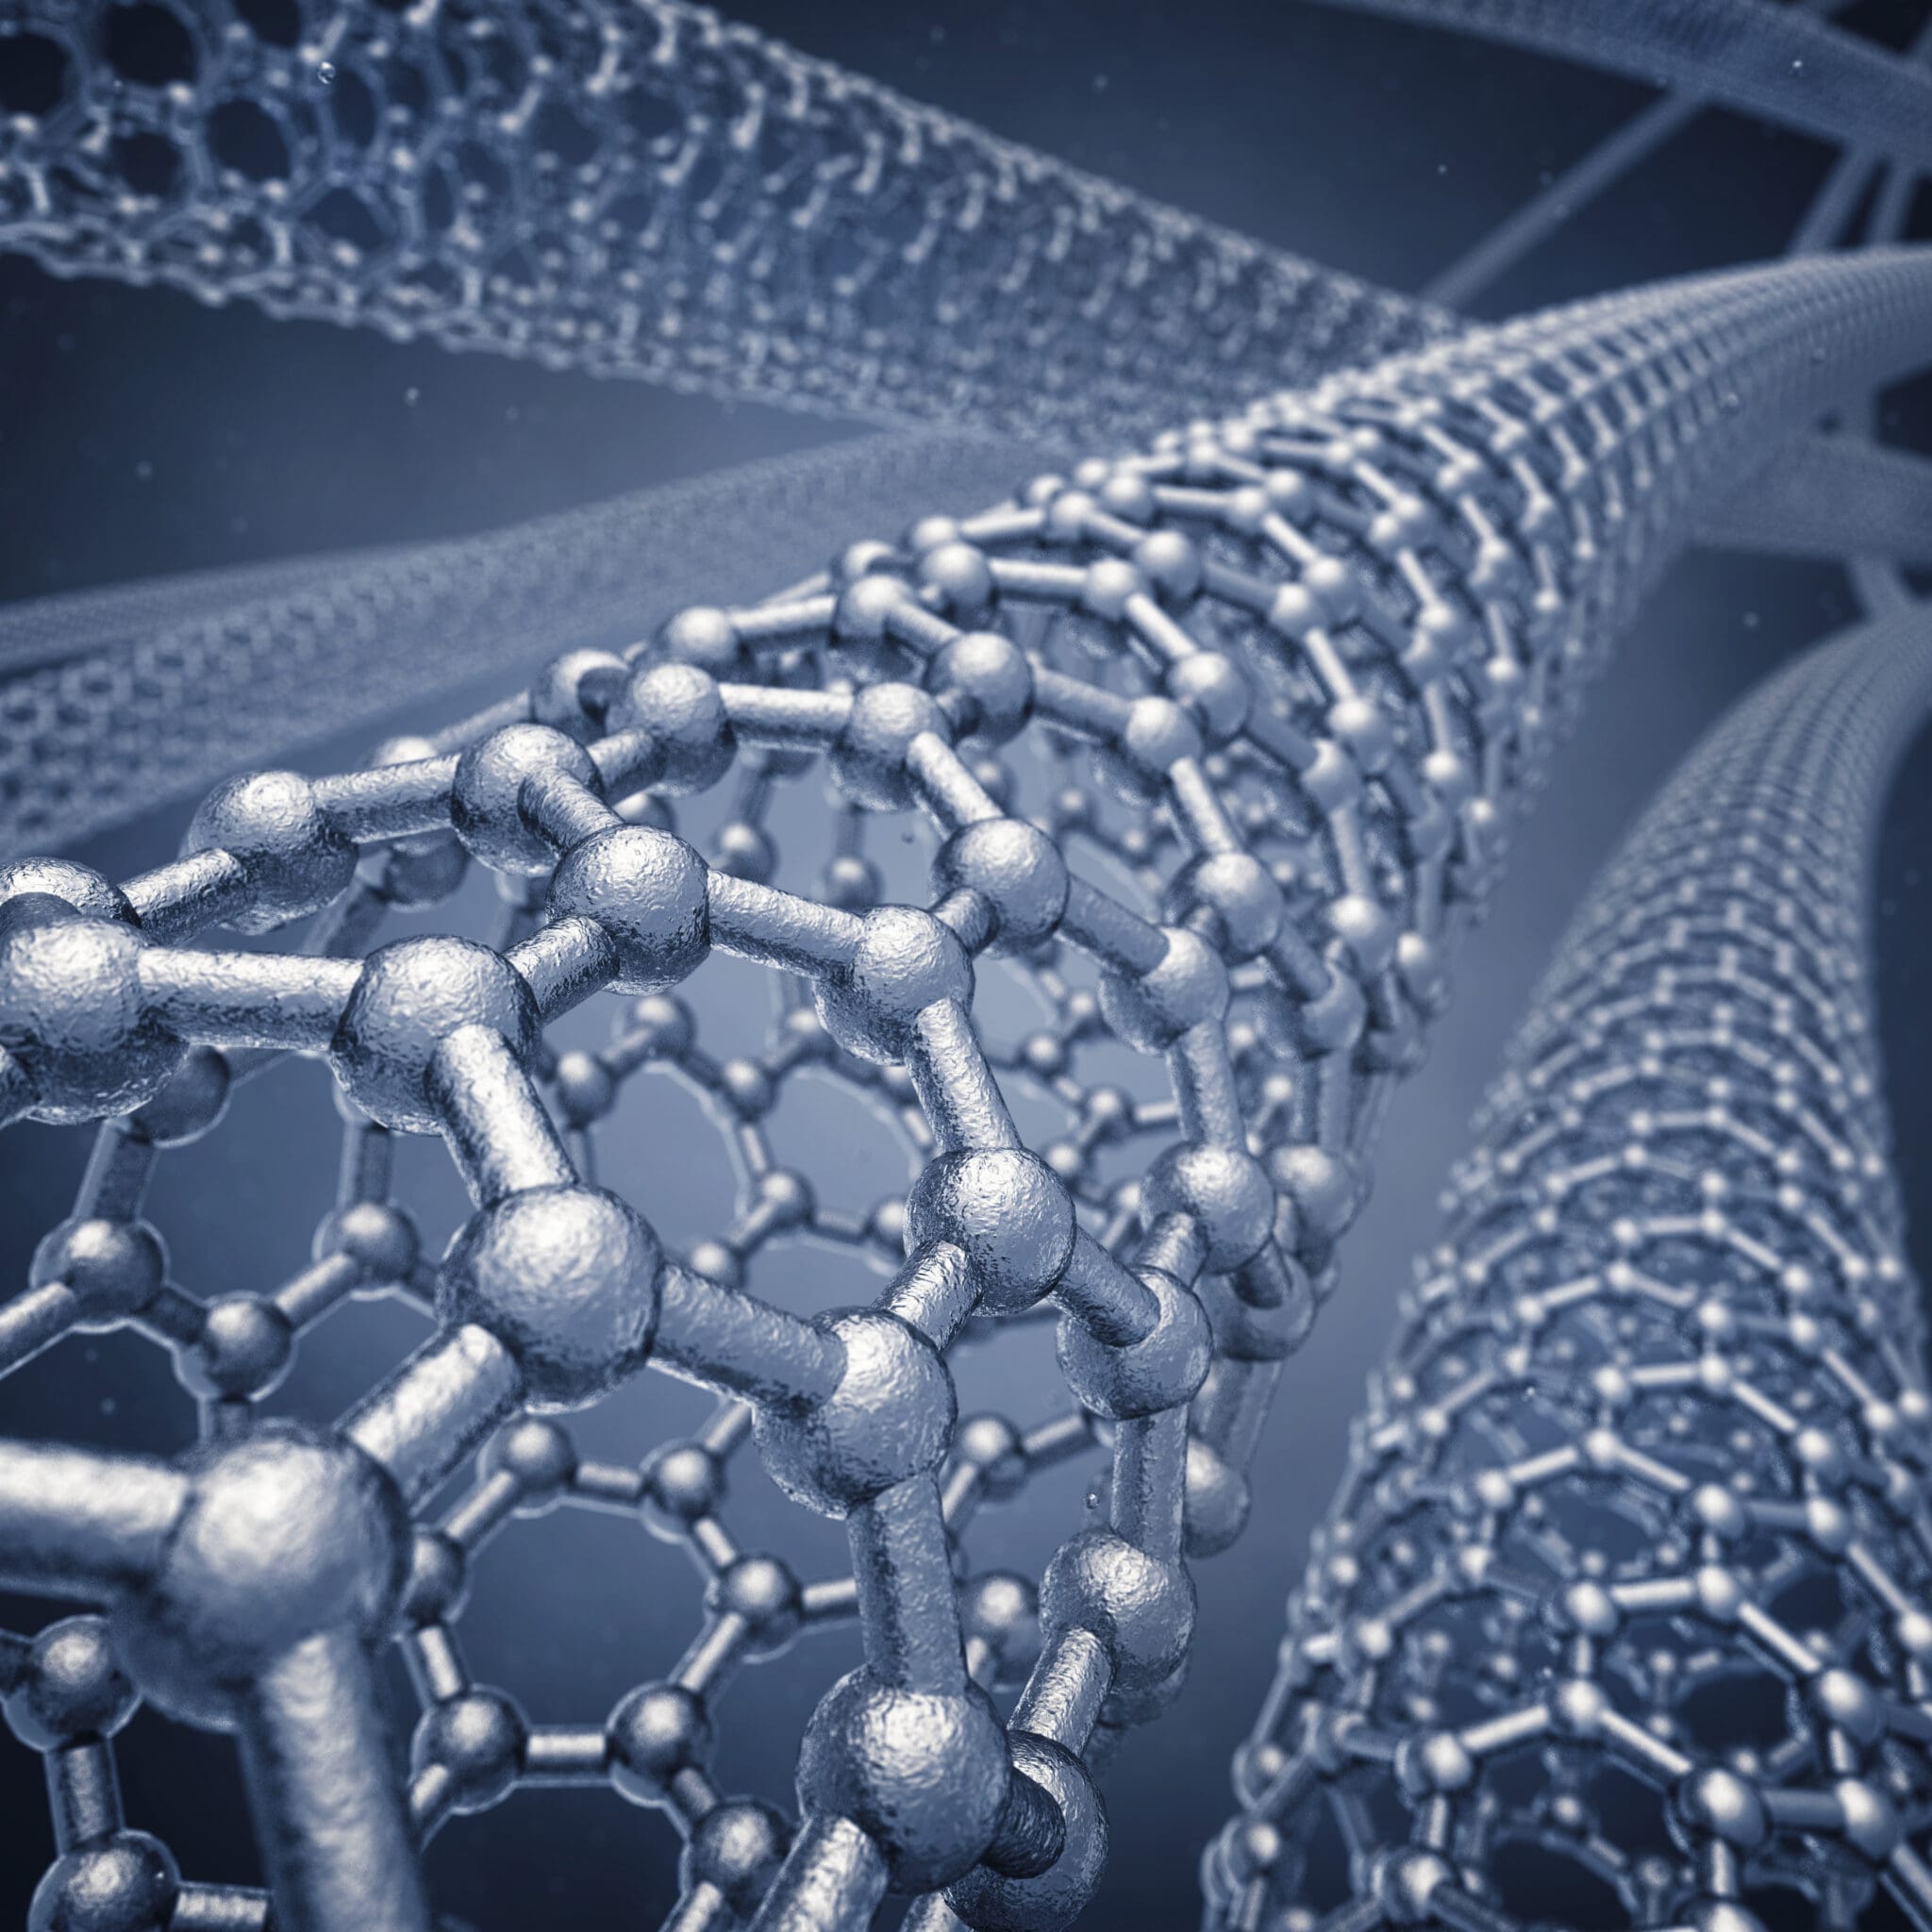 EPA Proposes New SNUR on Carbon Nanotubes